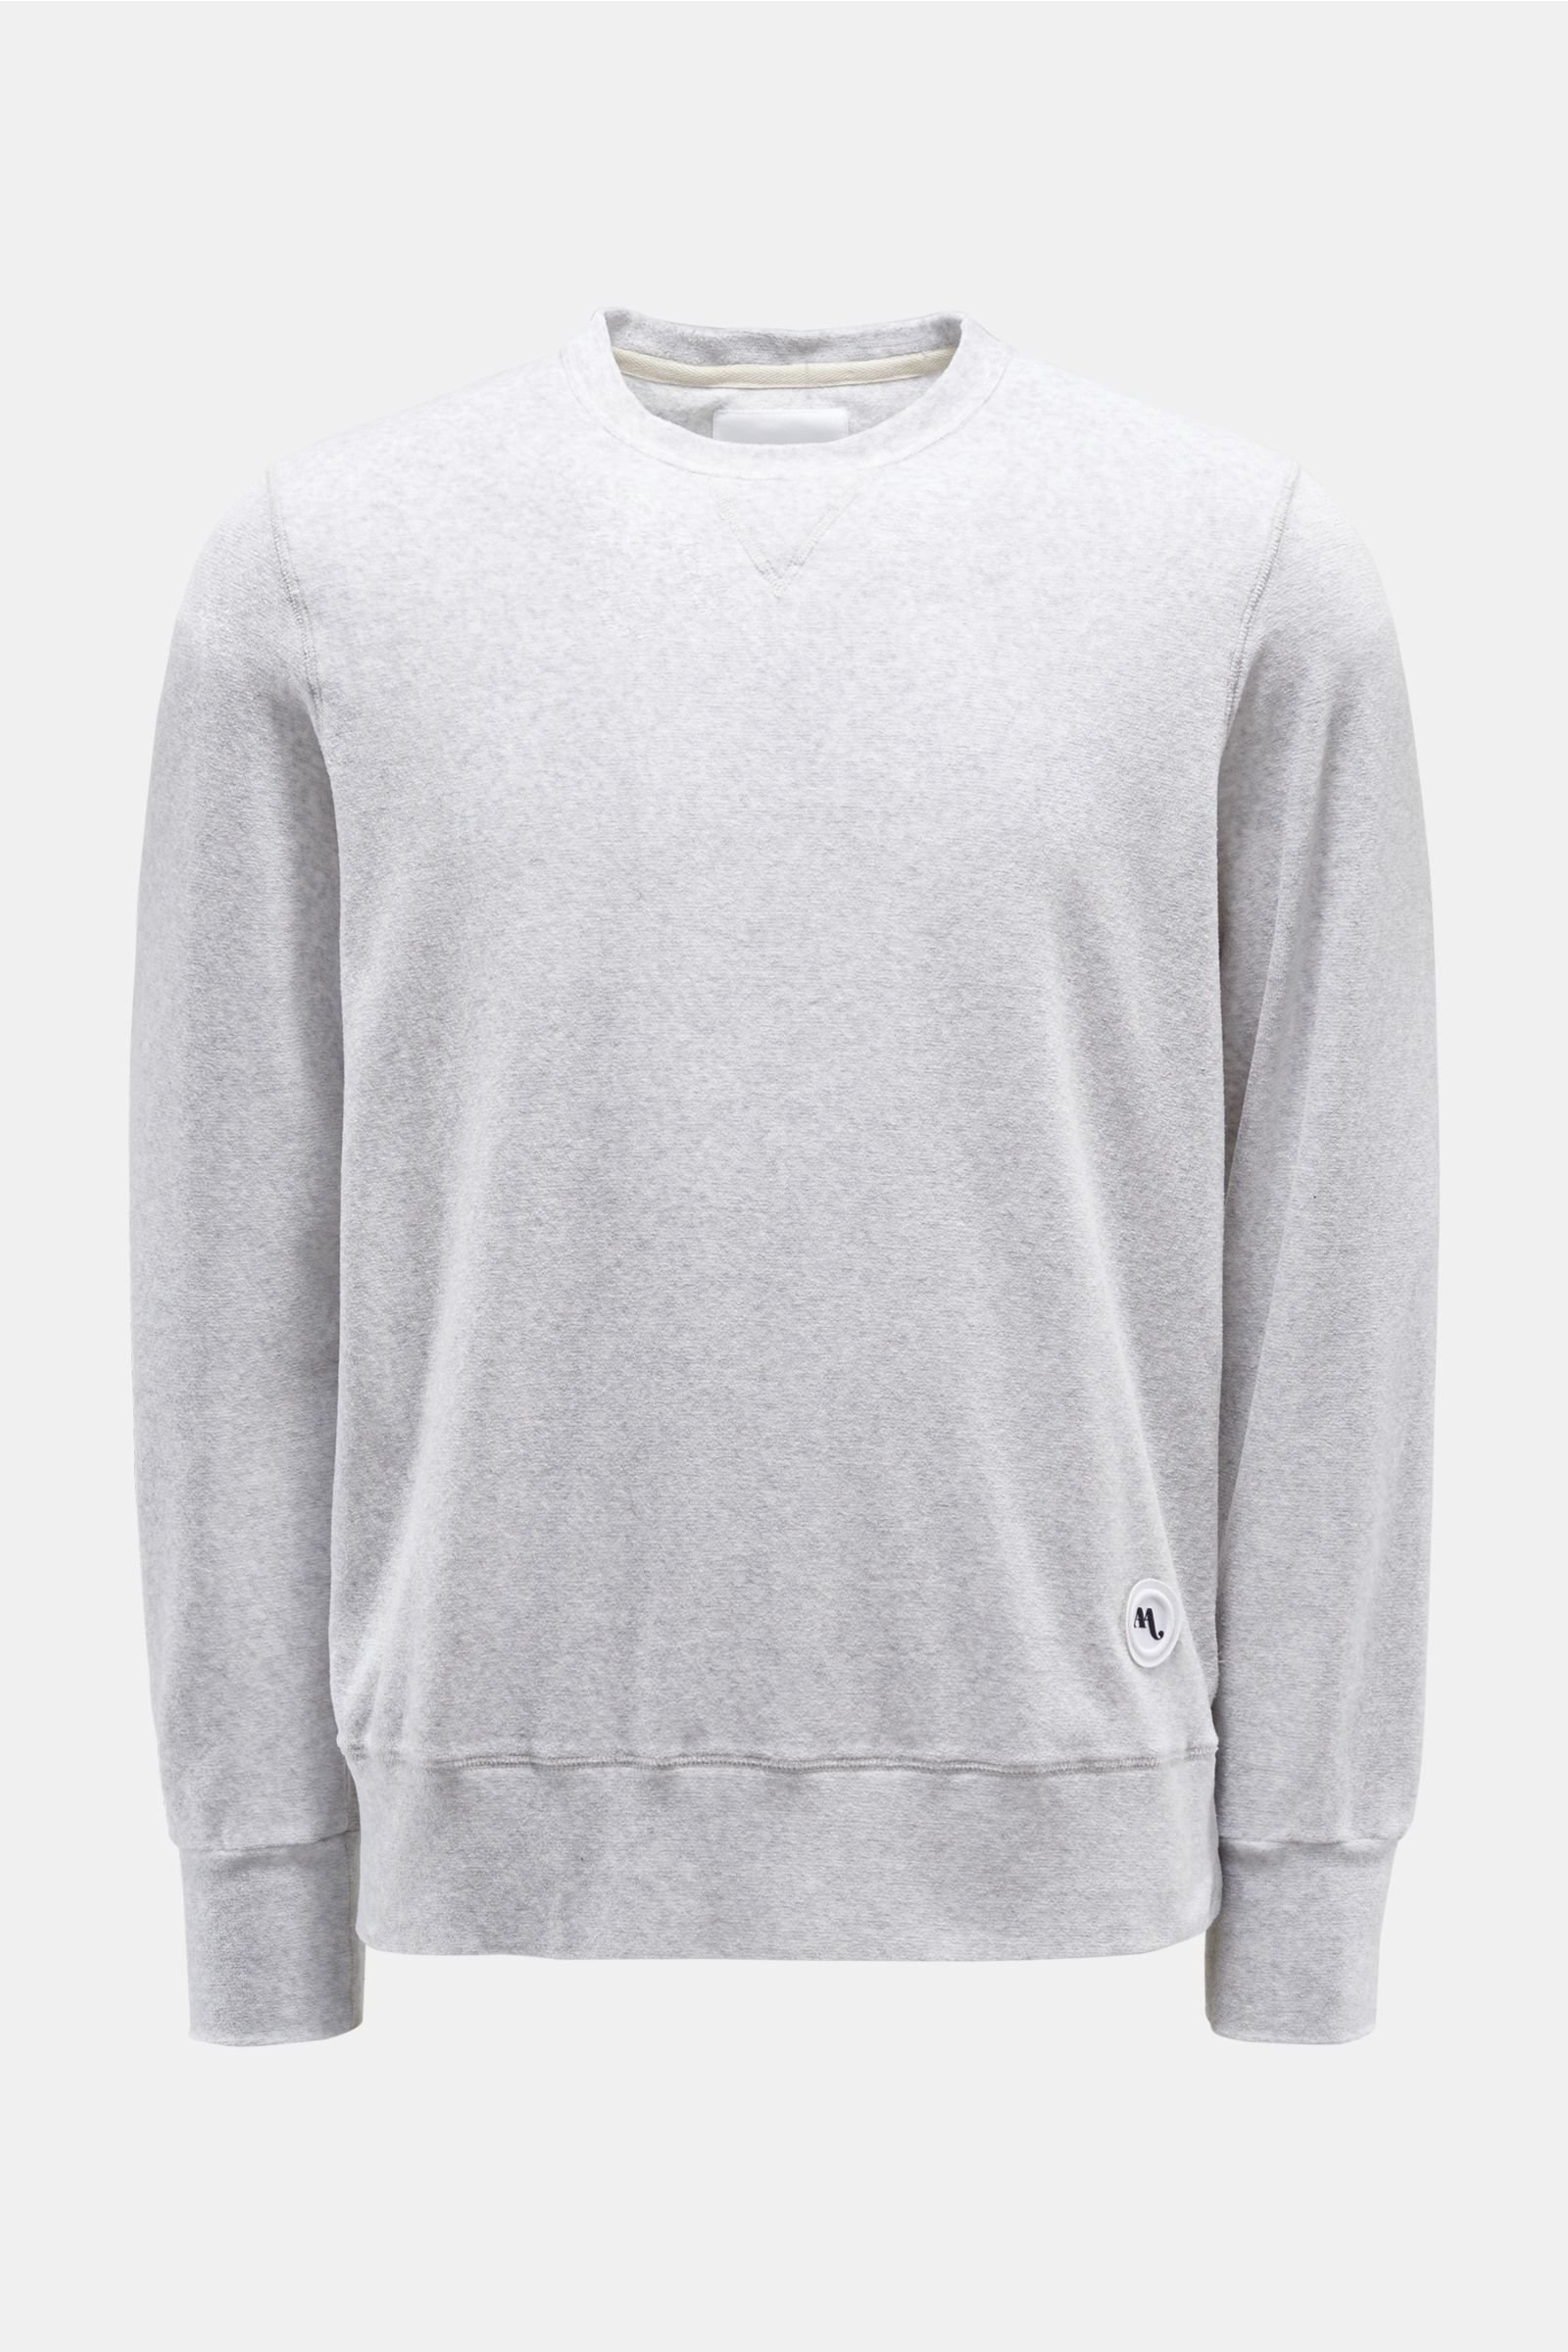 Velour crew neck sweatshirt 'Aasteria' light grey